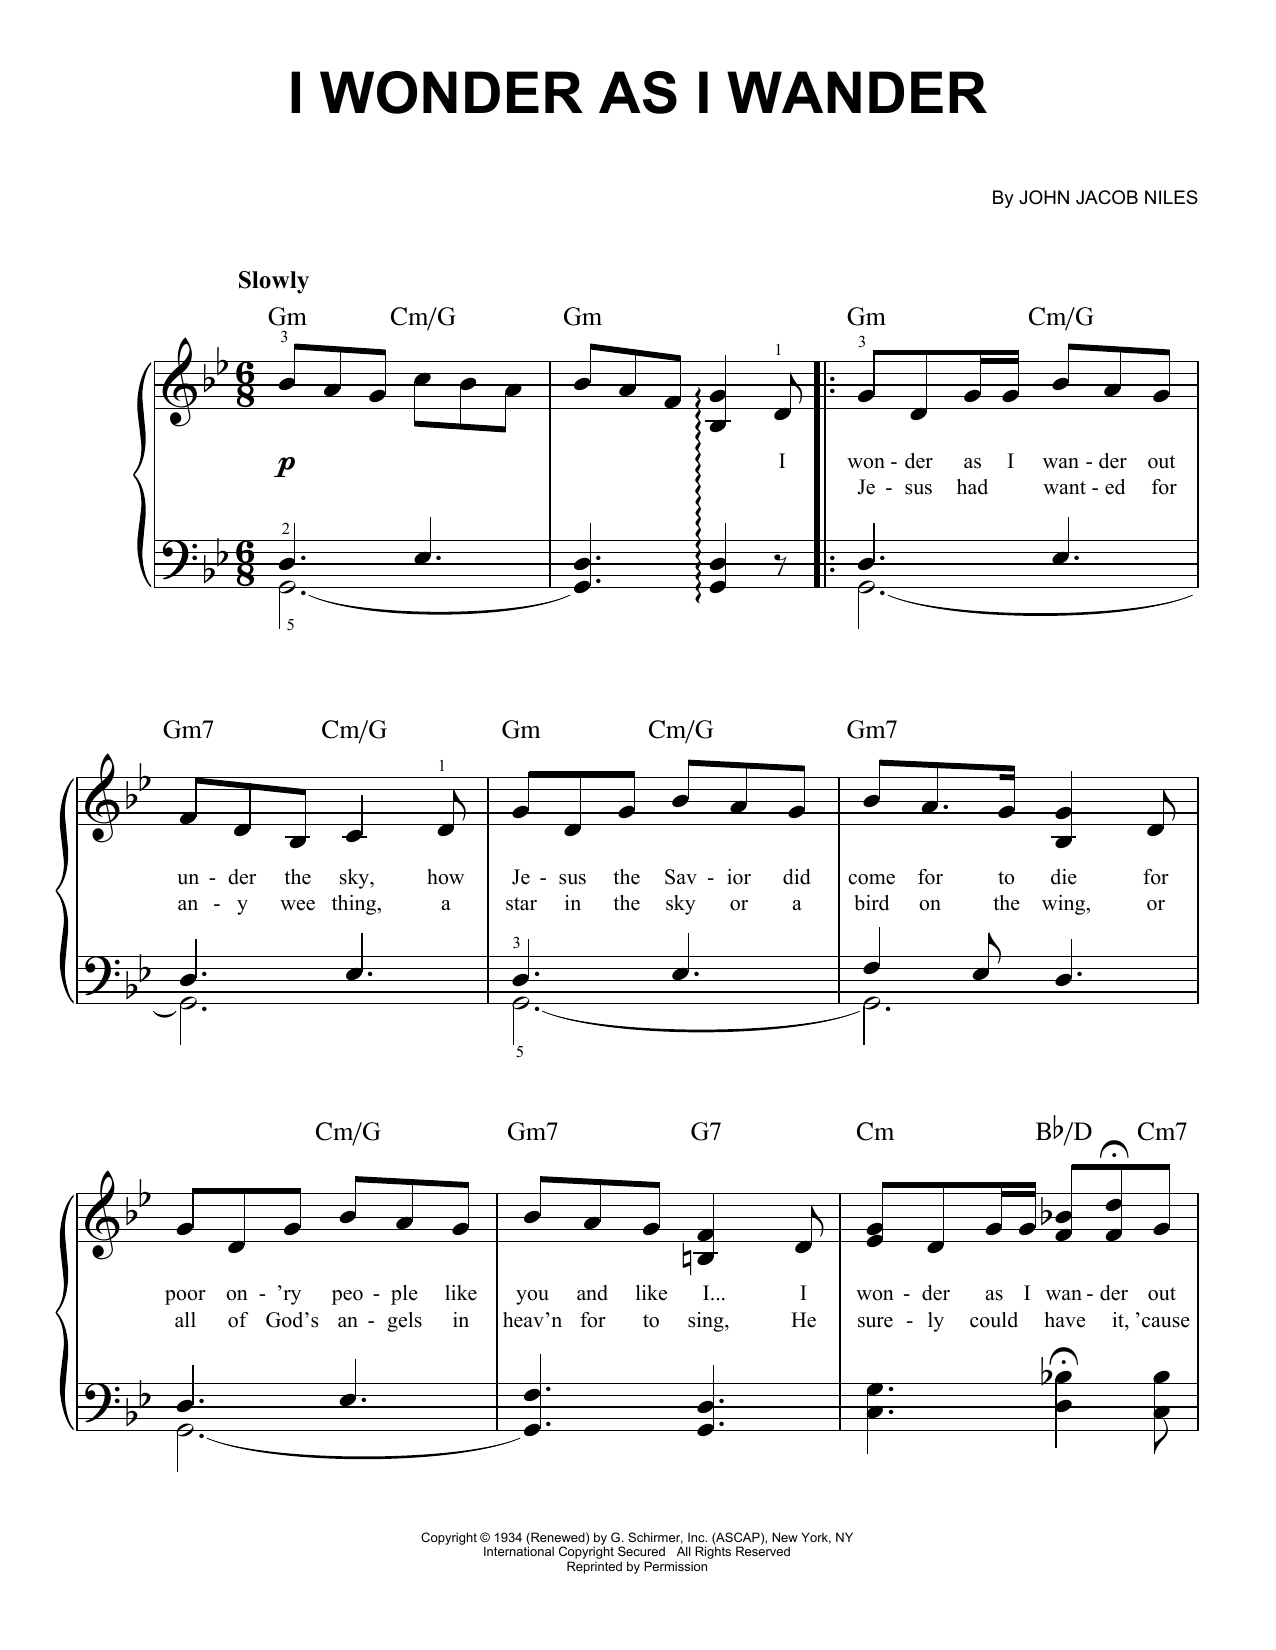 John Jacob Niles I Wonder As I Wander Sheet Music Notes & Chords for Tenor Saxophone - Download or Print PDF